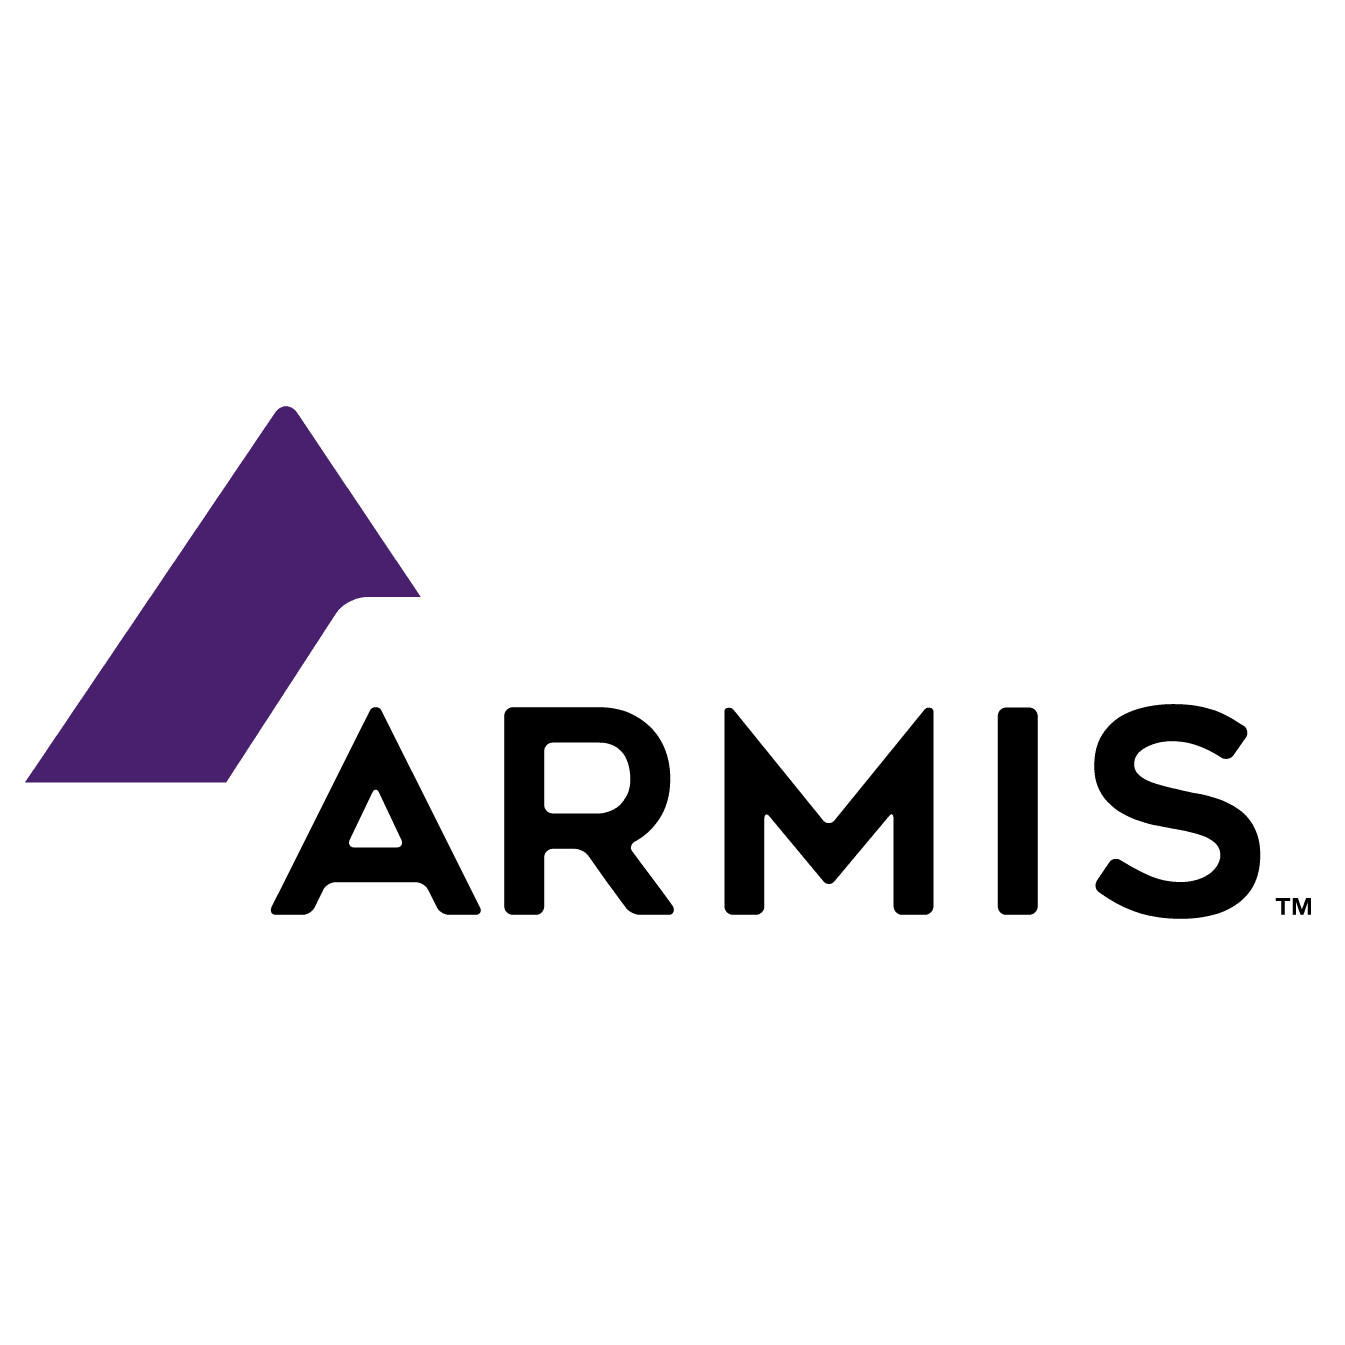 Armis Security Logo for active job listings